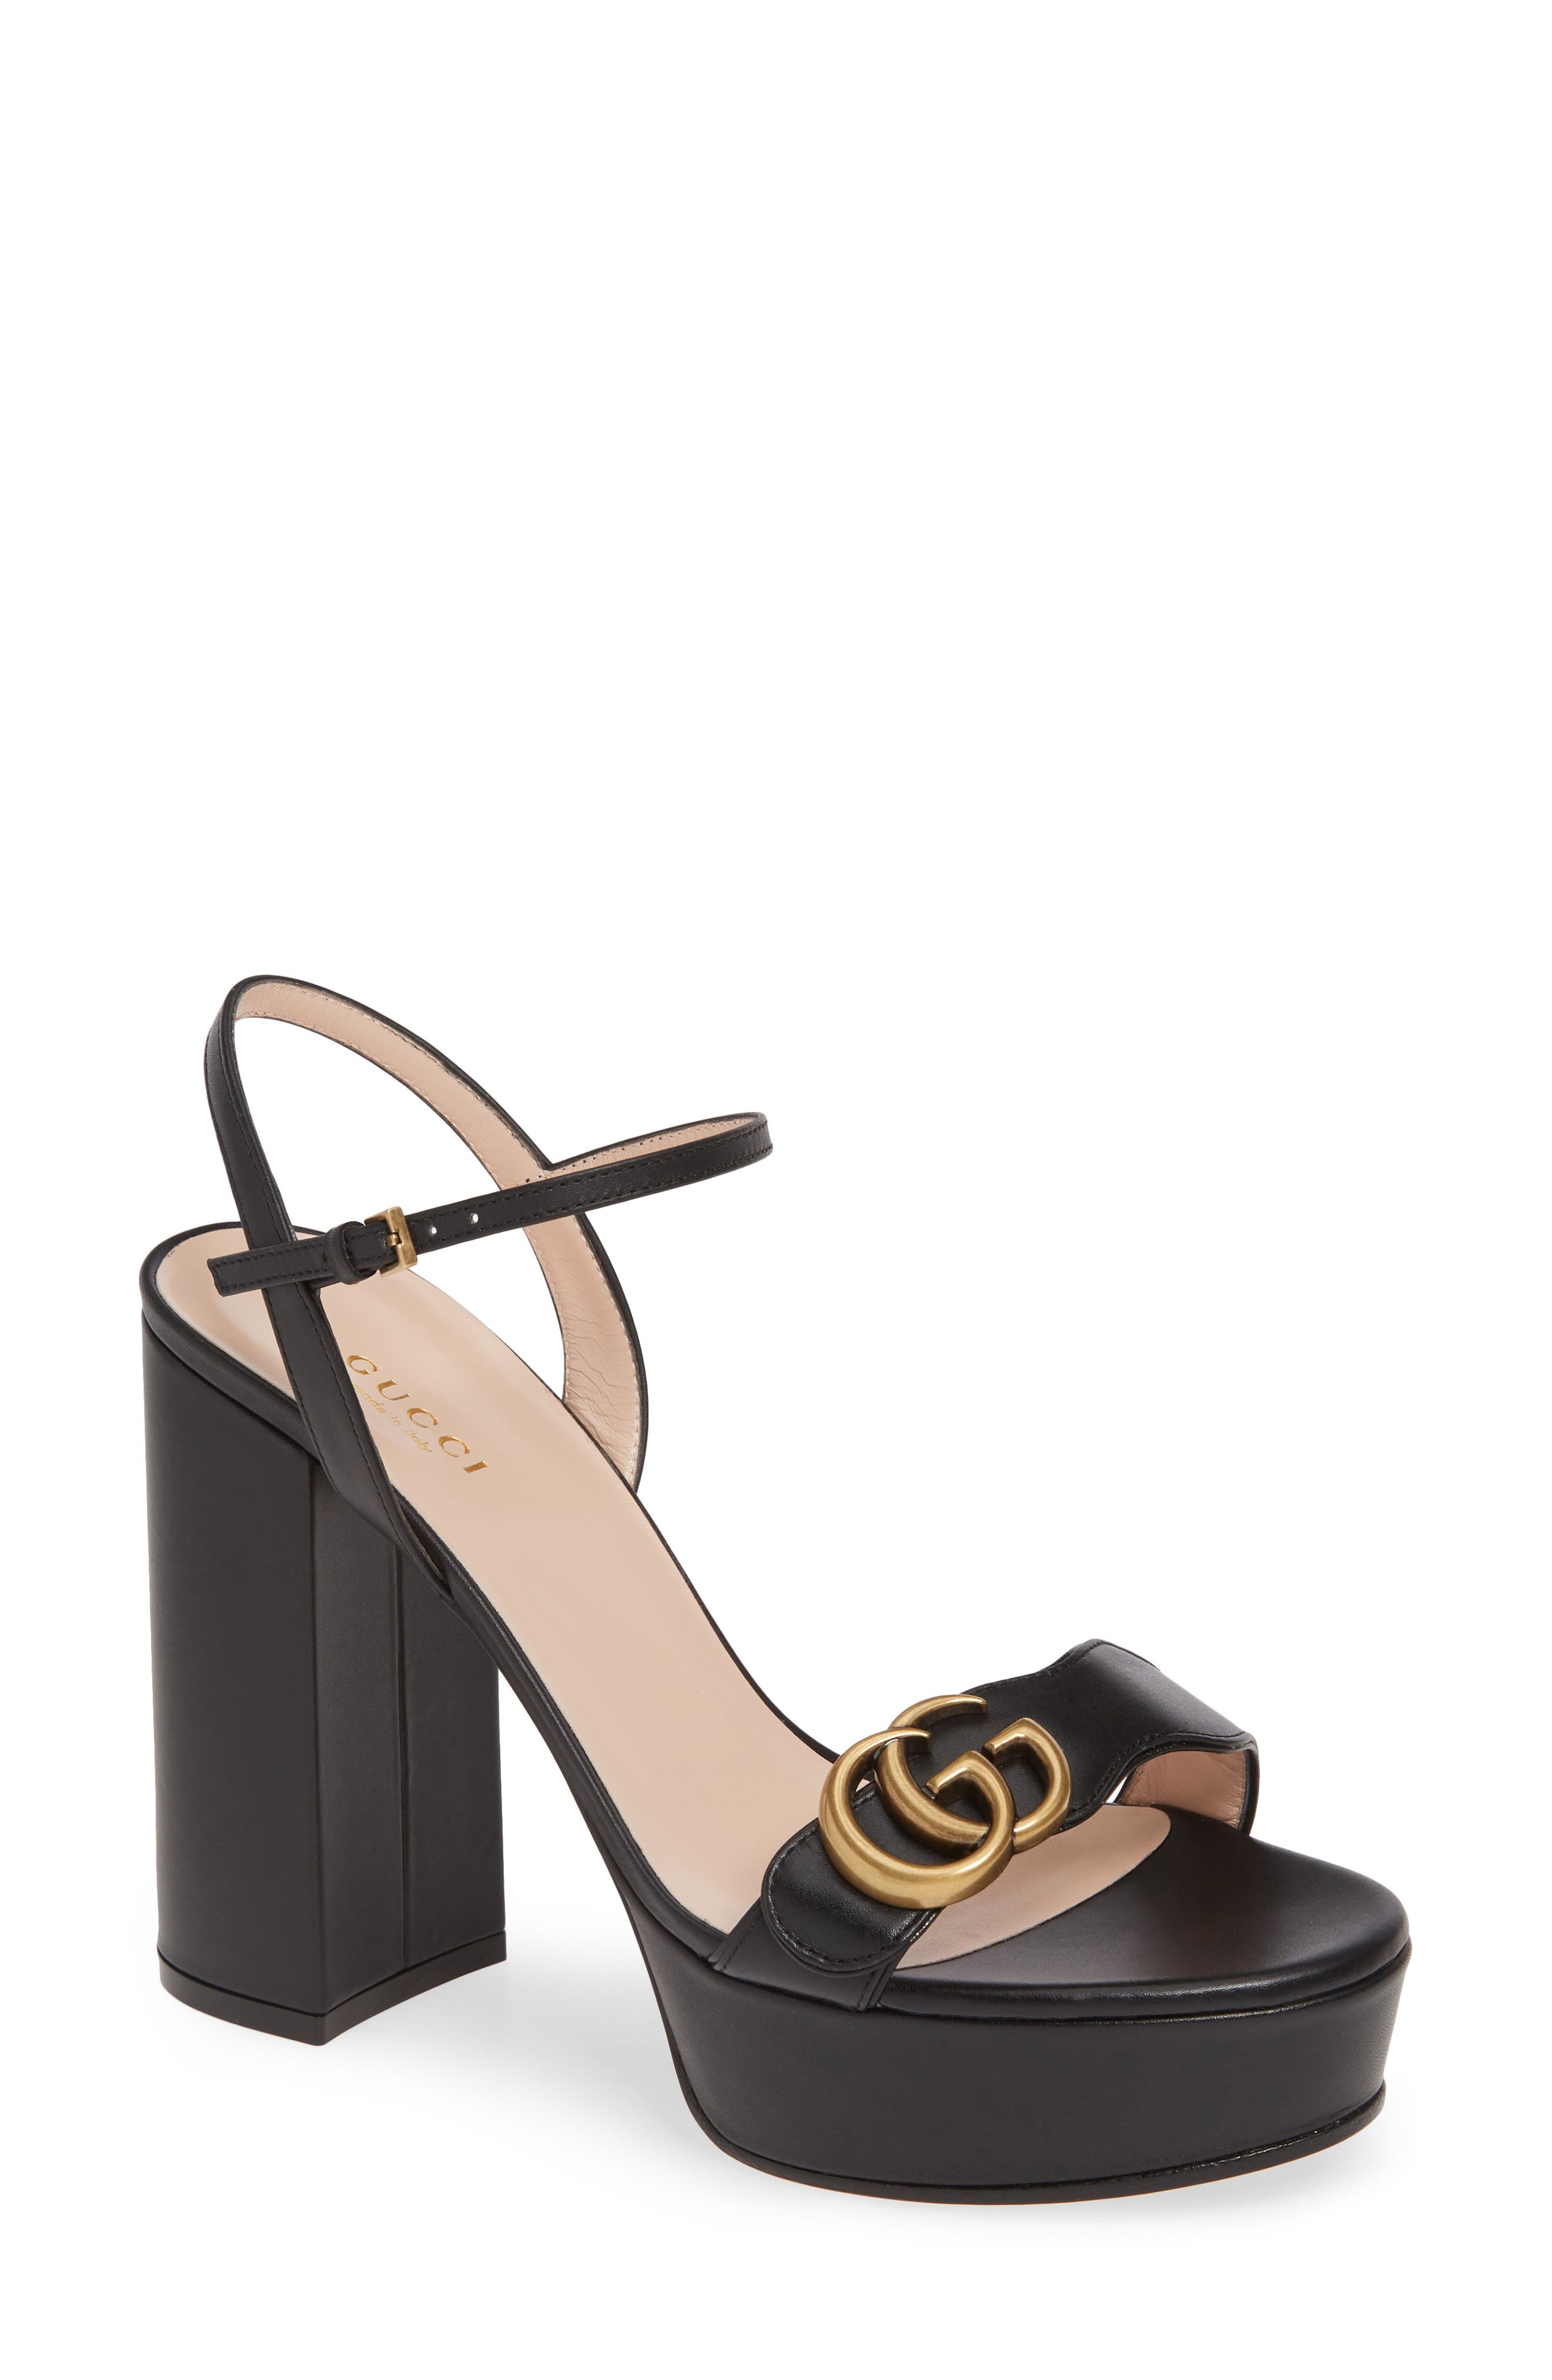 gucci black sandal heels